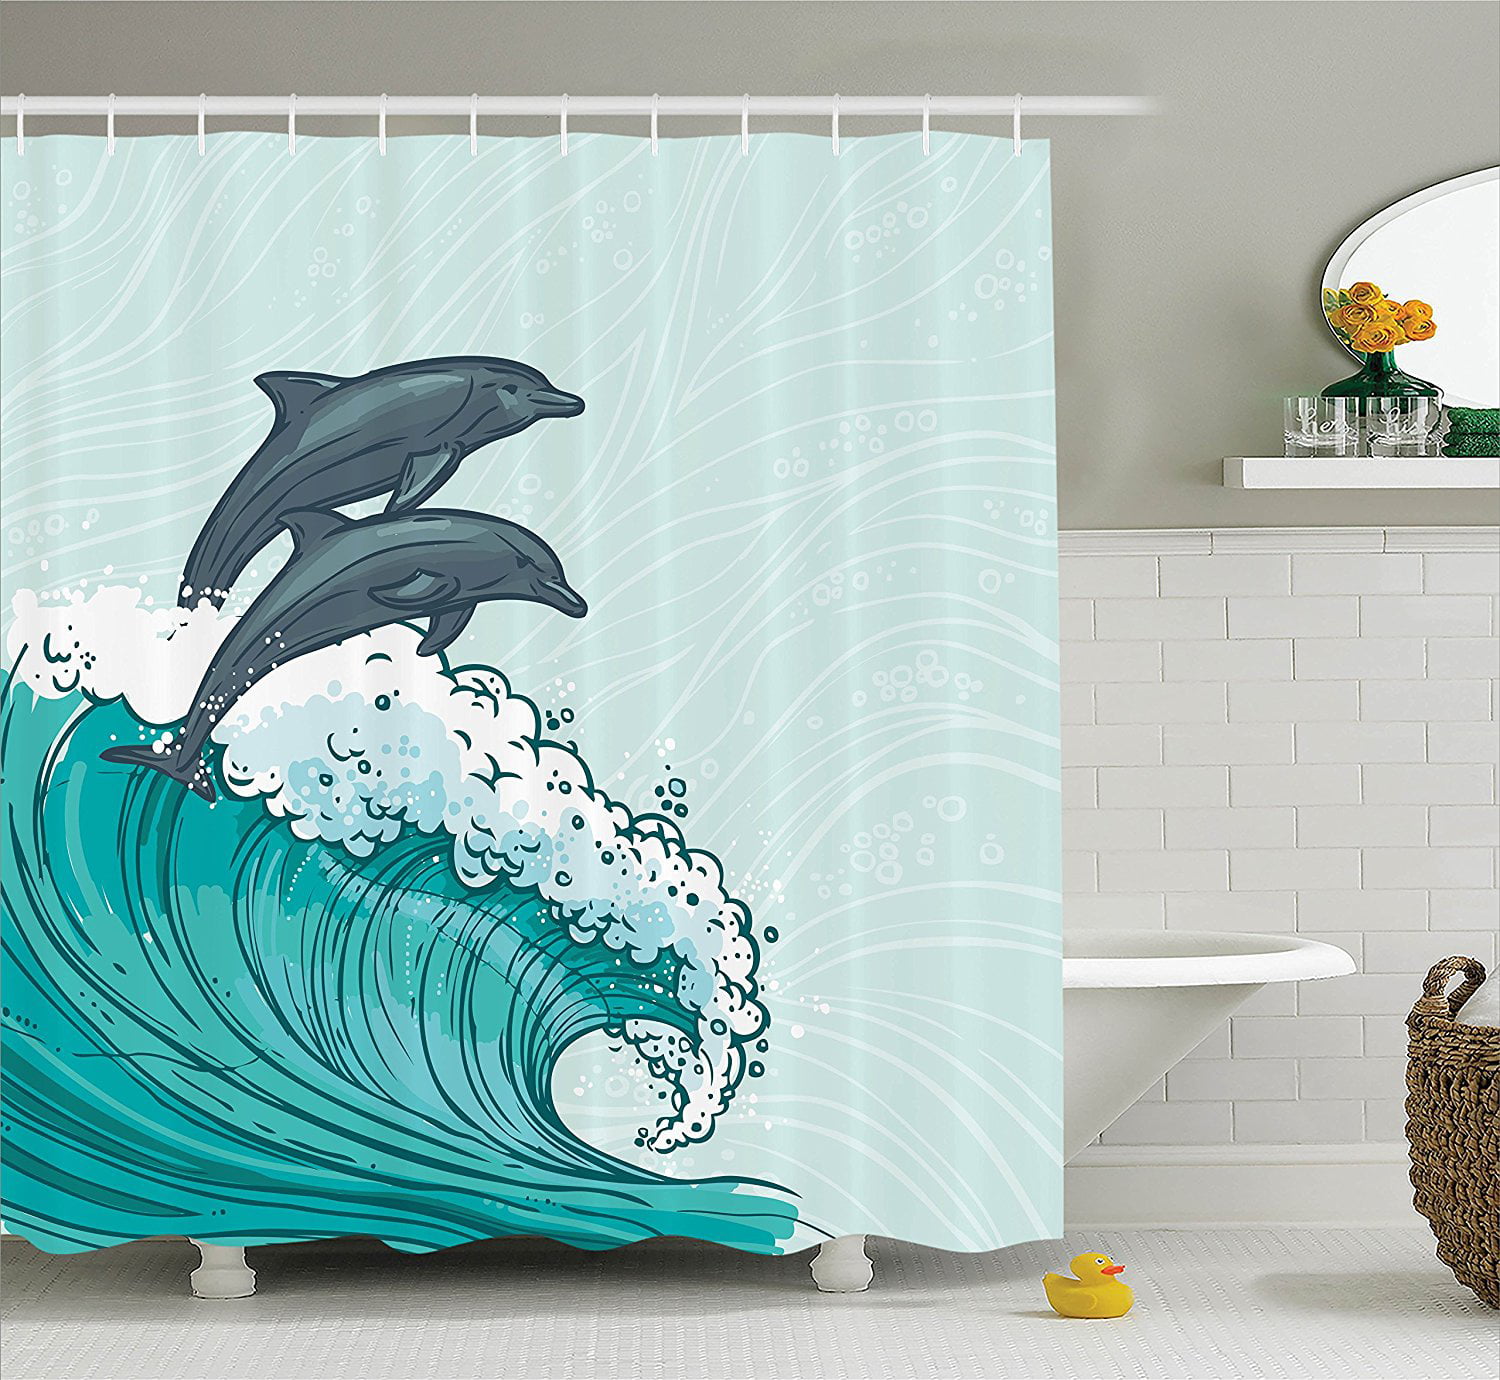 Undersea Mermaid and Dolphin Shower Curtain Liner Waterproof Fabric Bathroom Mat